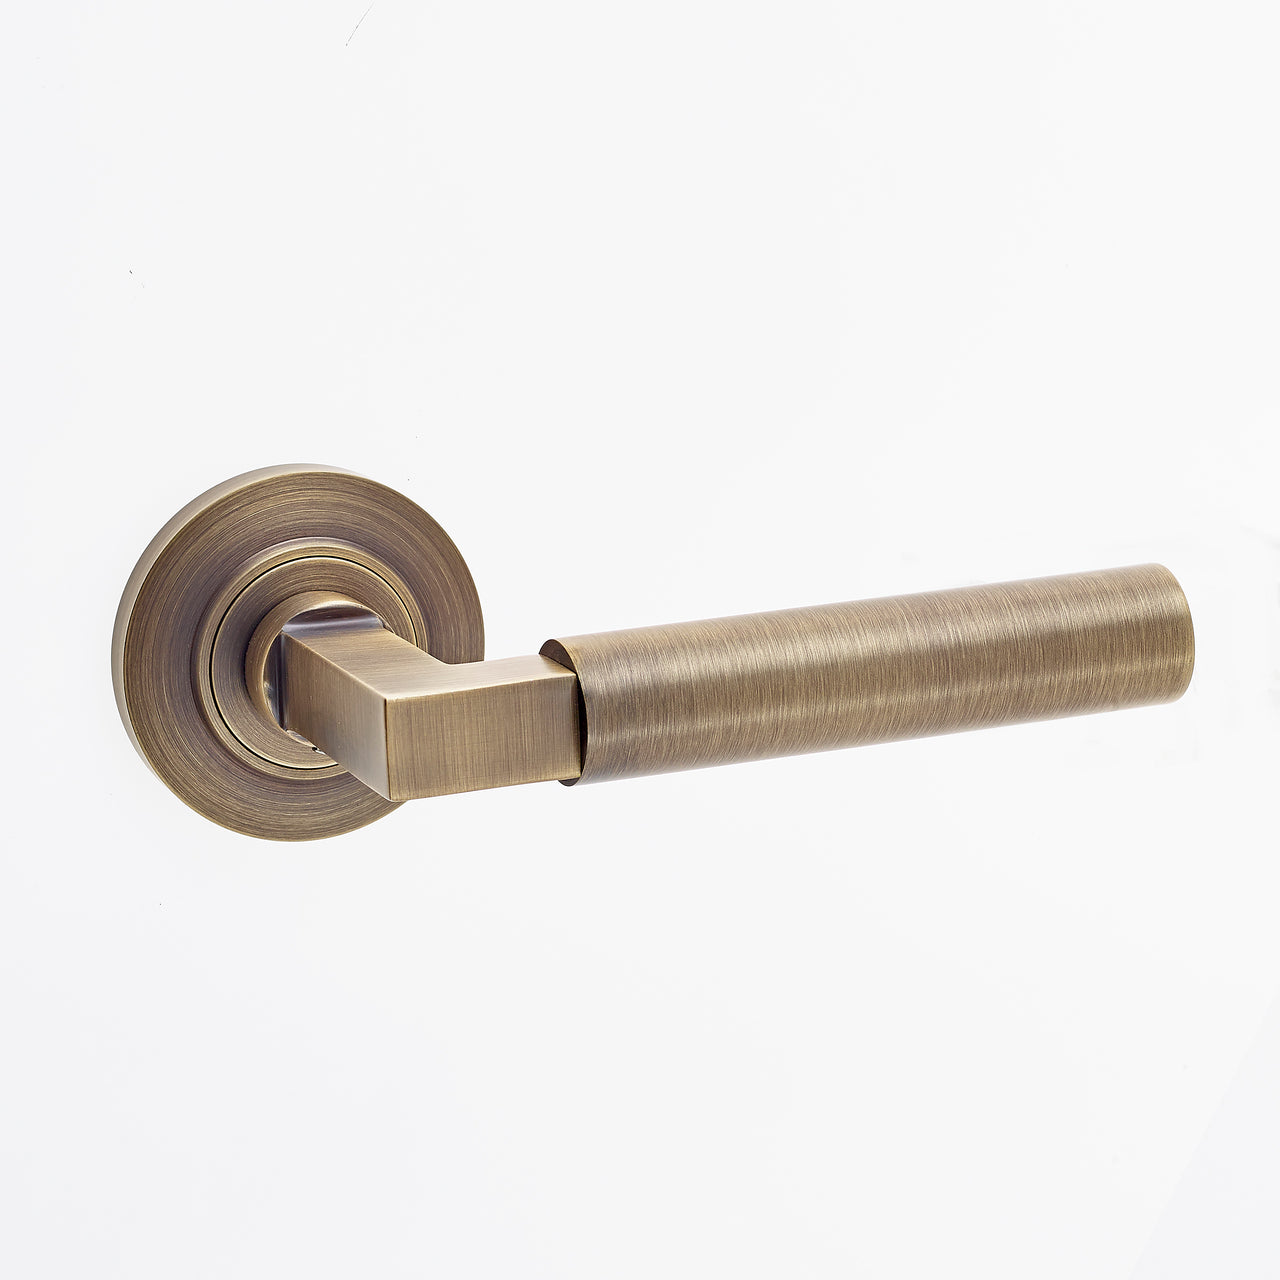 Westminster Lever Door Handles - Burlington Range - Antique Brass/Bronze - CHAMFERED ROSE OPTION